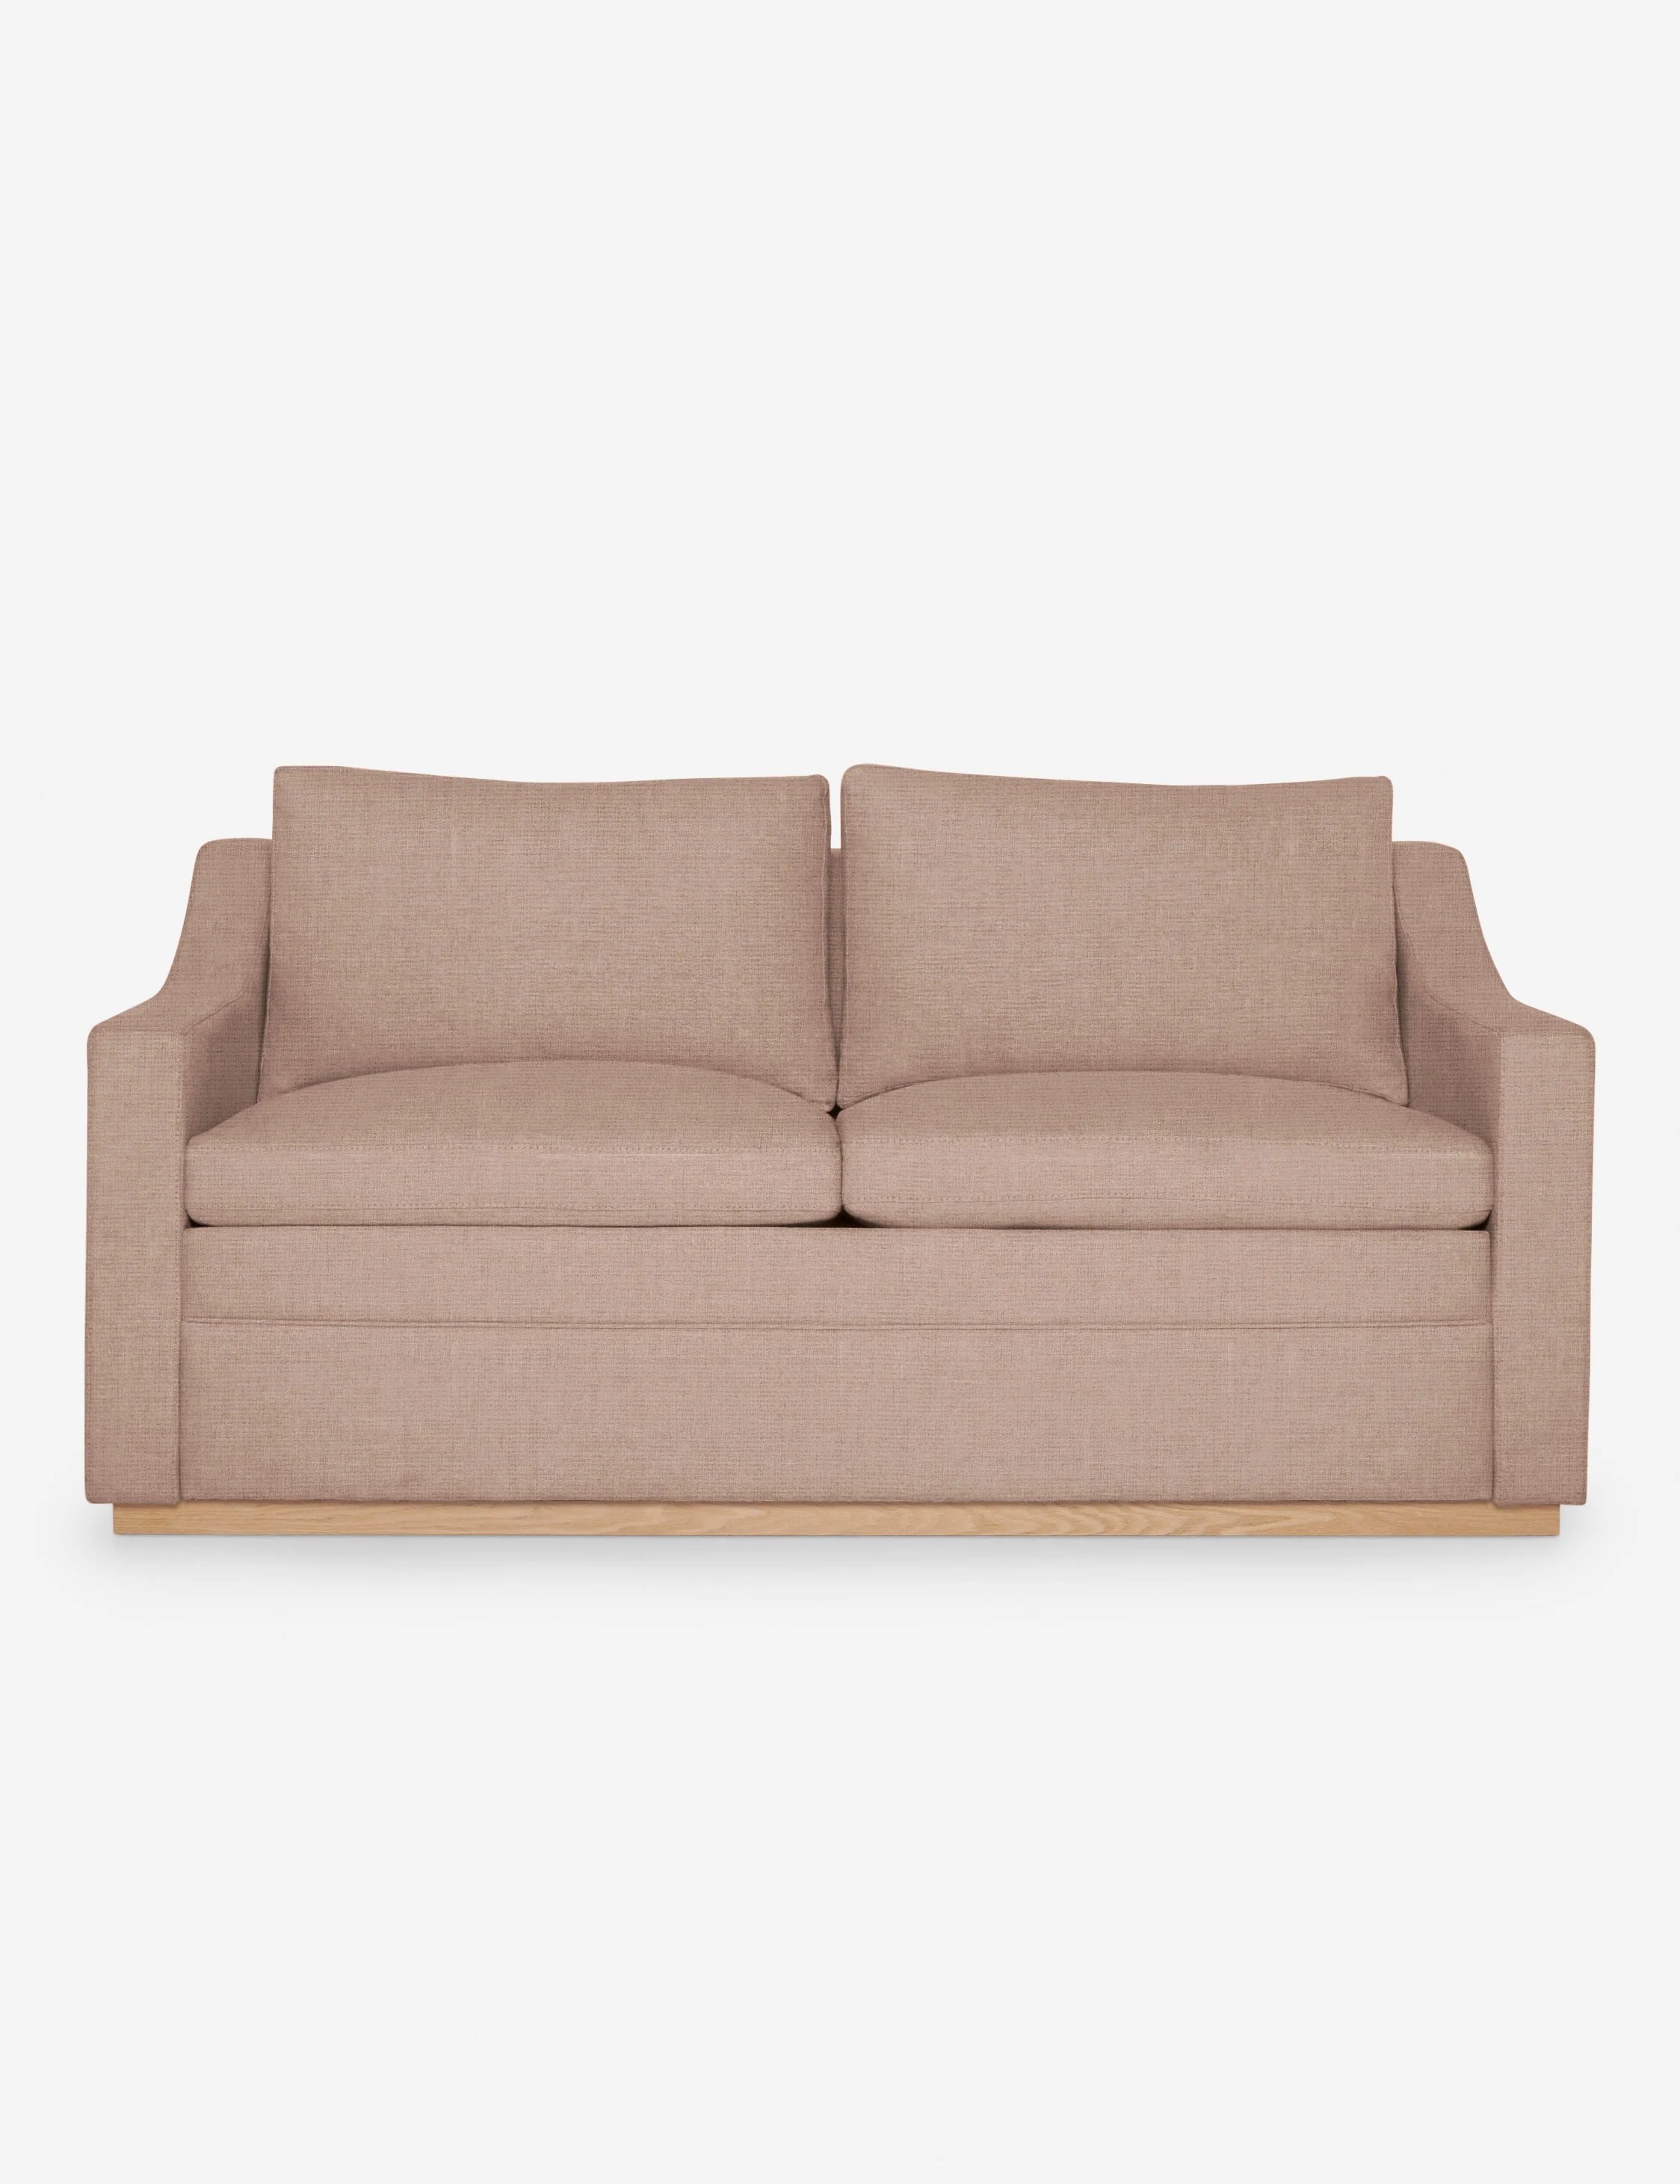 Coniston Sleeper Sofa by Ginny Macdonald - Image 0